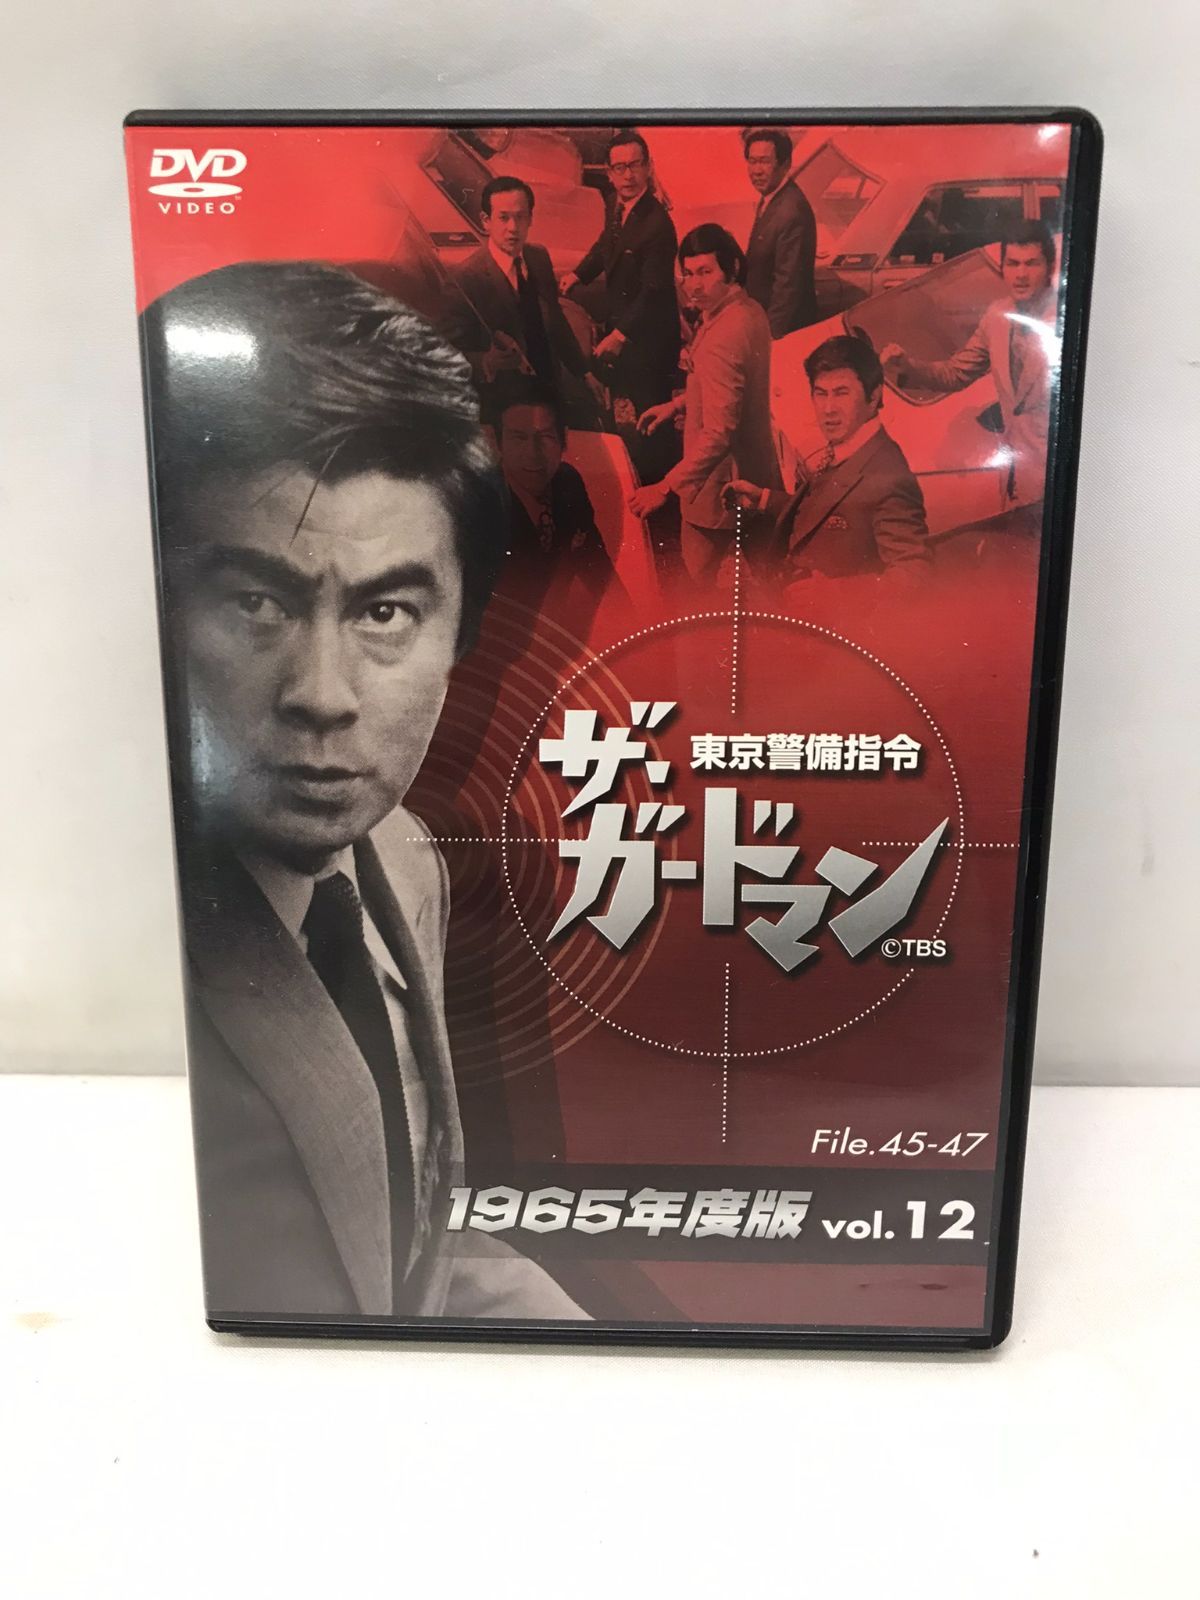 DVD】東京警備指令 ザ・ガードマン 1965年度版 vol.12 出演 宇津井健 